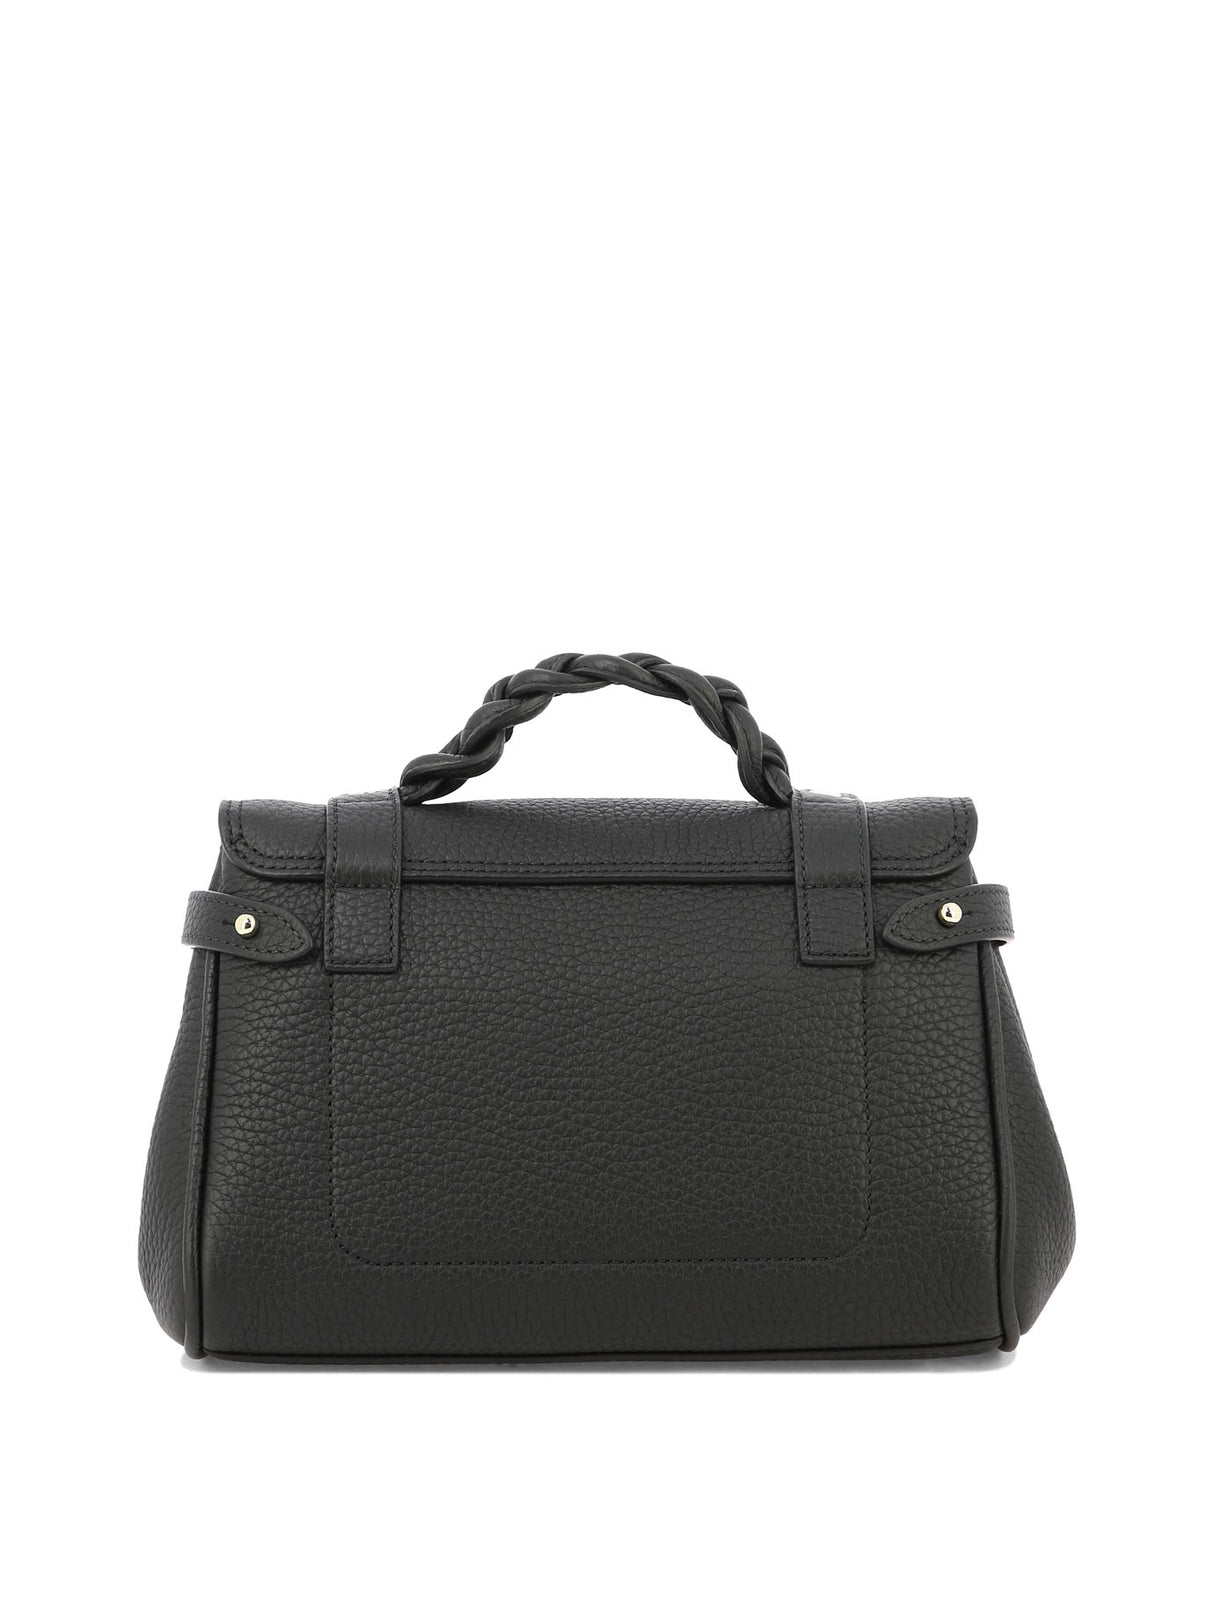 MULBERRY Mini Alexa Crossbody Handbag with Braided Top Handle and Postman's Lock Closure in Black Leather